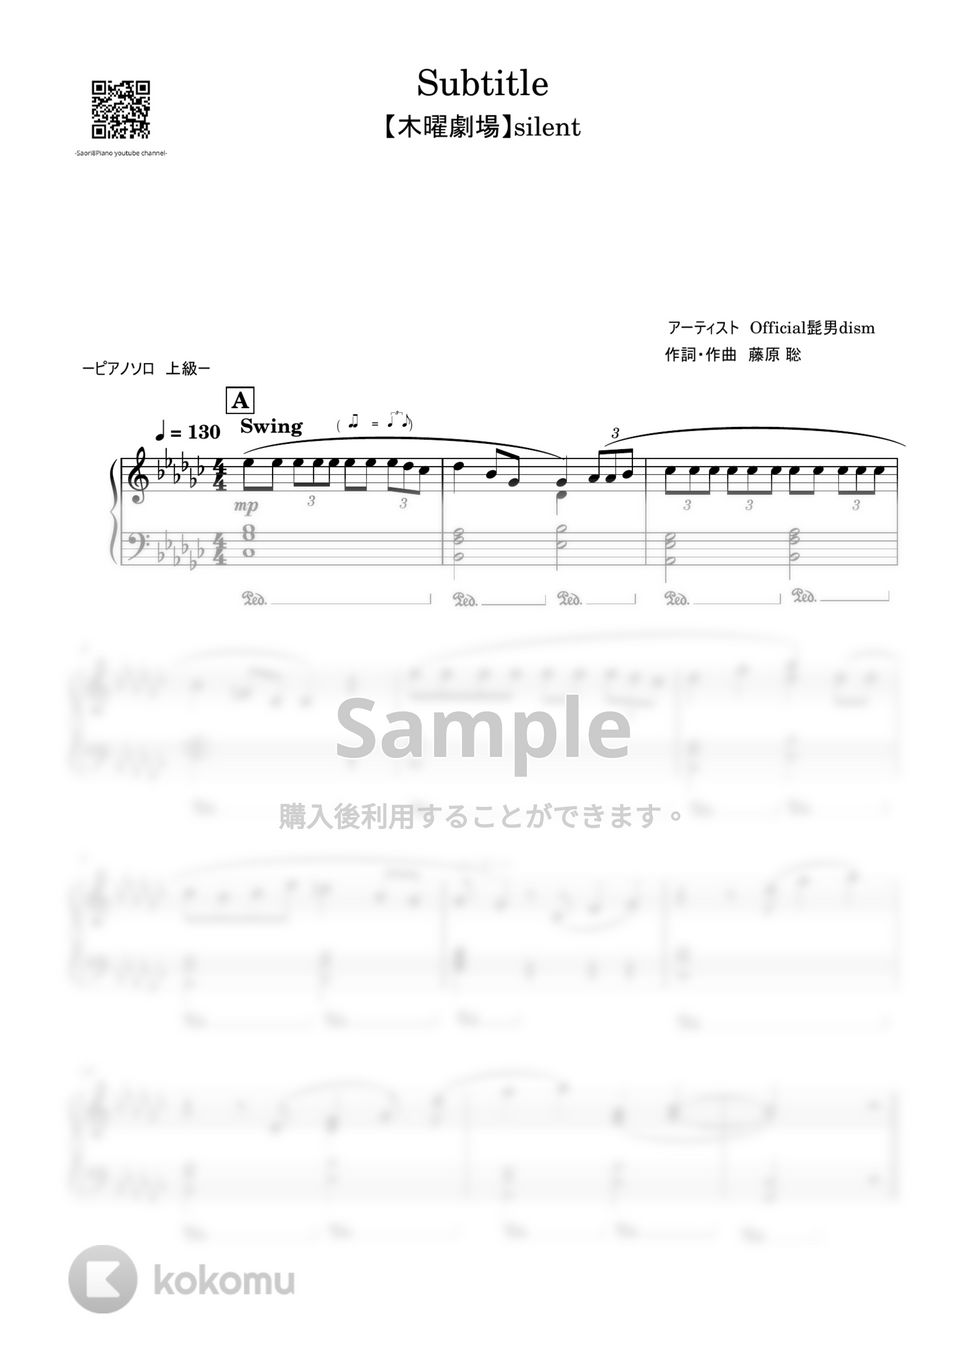 Official髭男dism - Subtitle (【ドラマ】Silent/上級レベル) by Saori8Piano